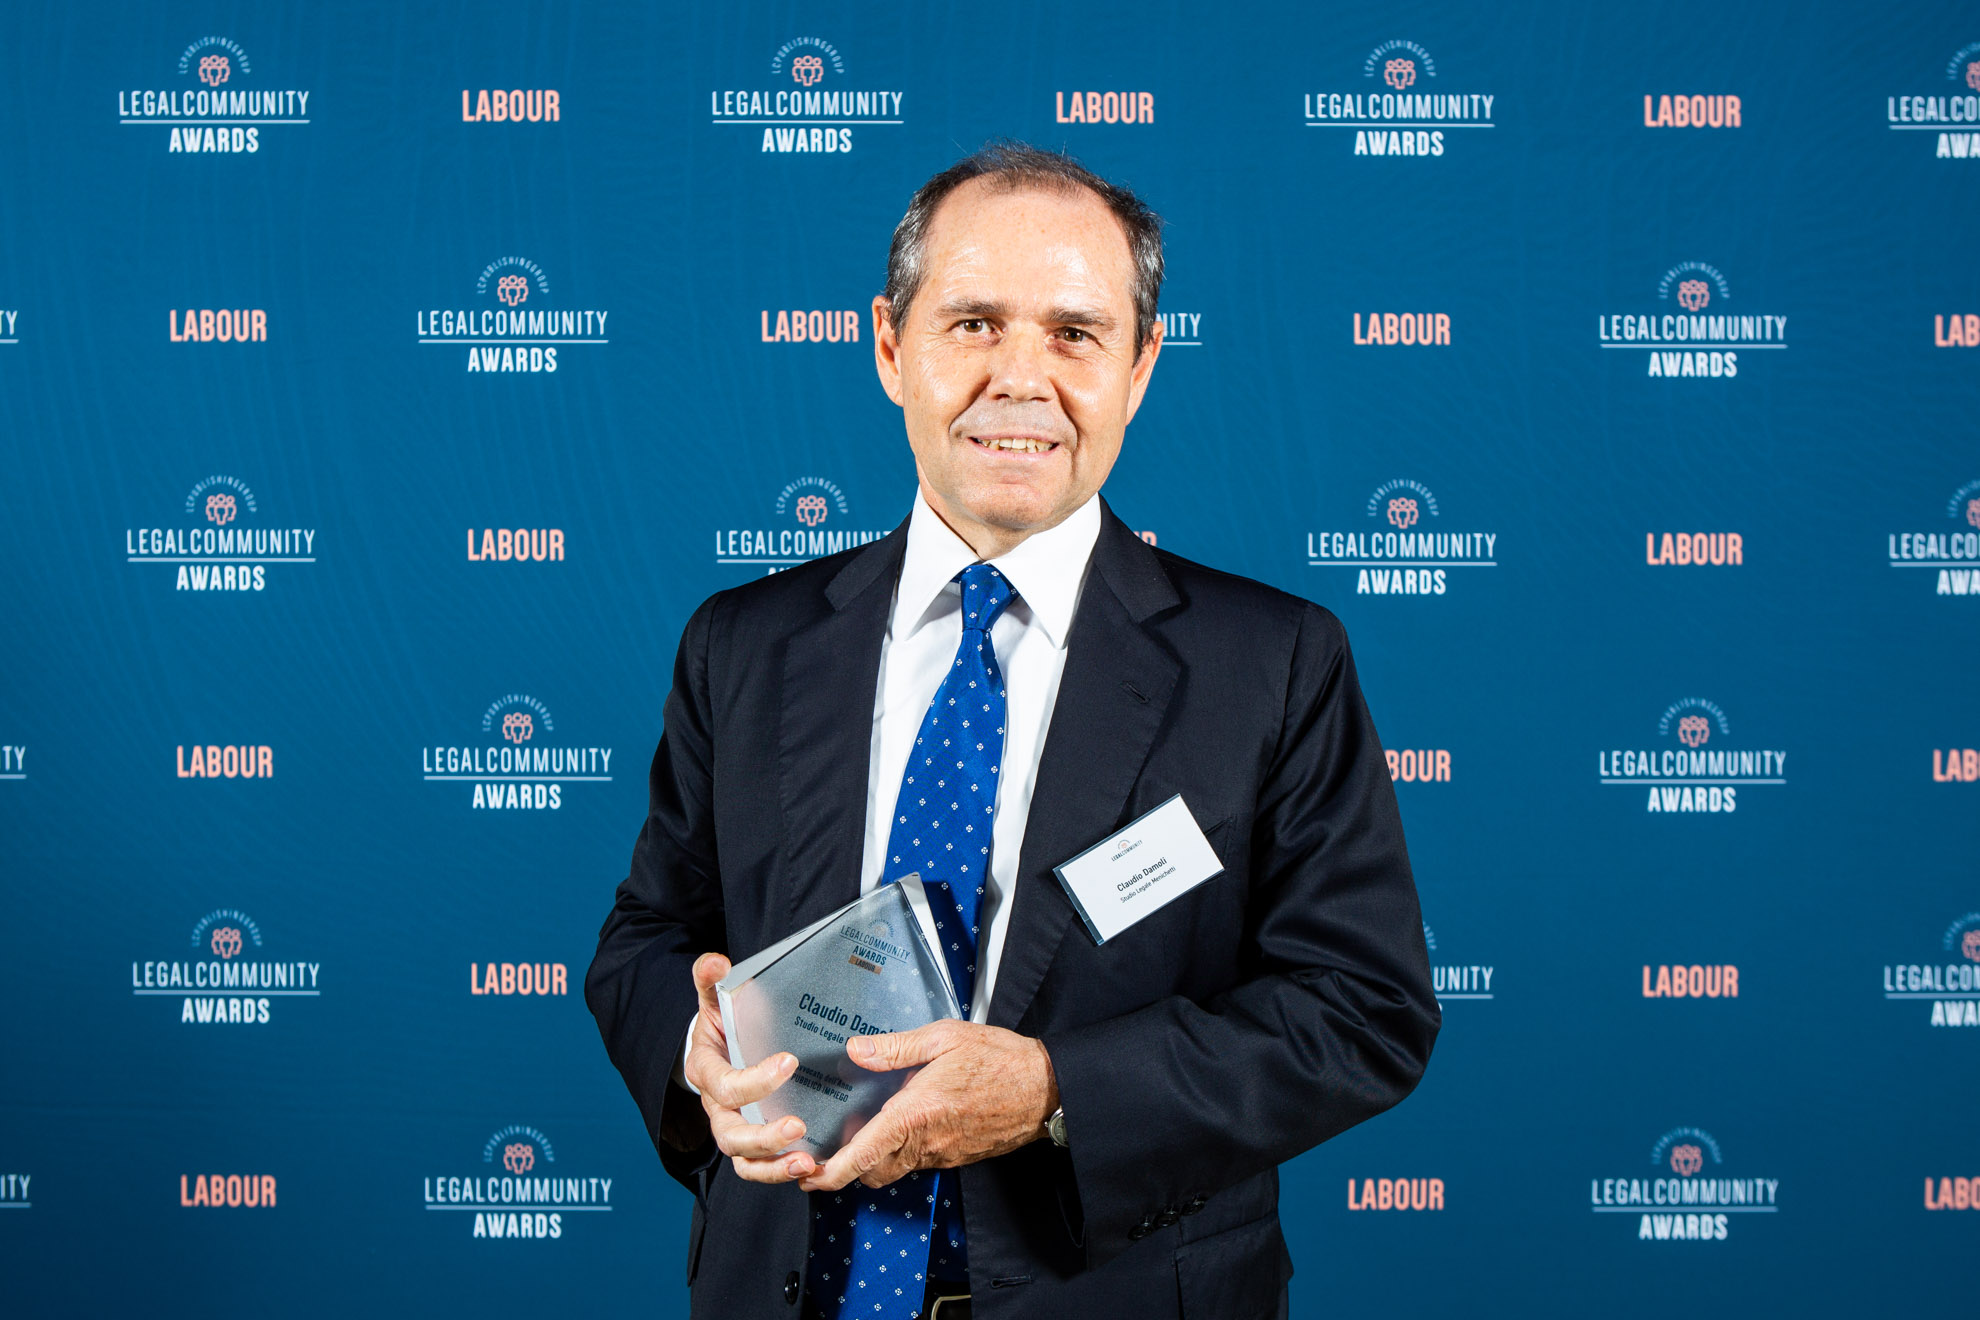 Legalcommunity Labour Awards 2019. Claudio Damoli - Public Employment Lawyer of the Year